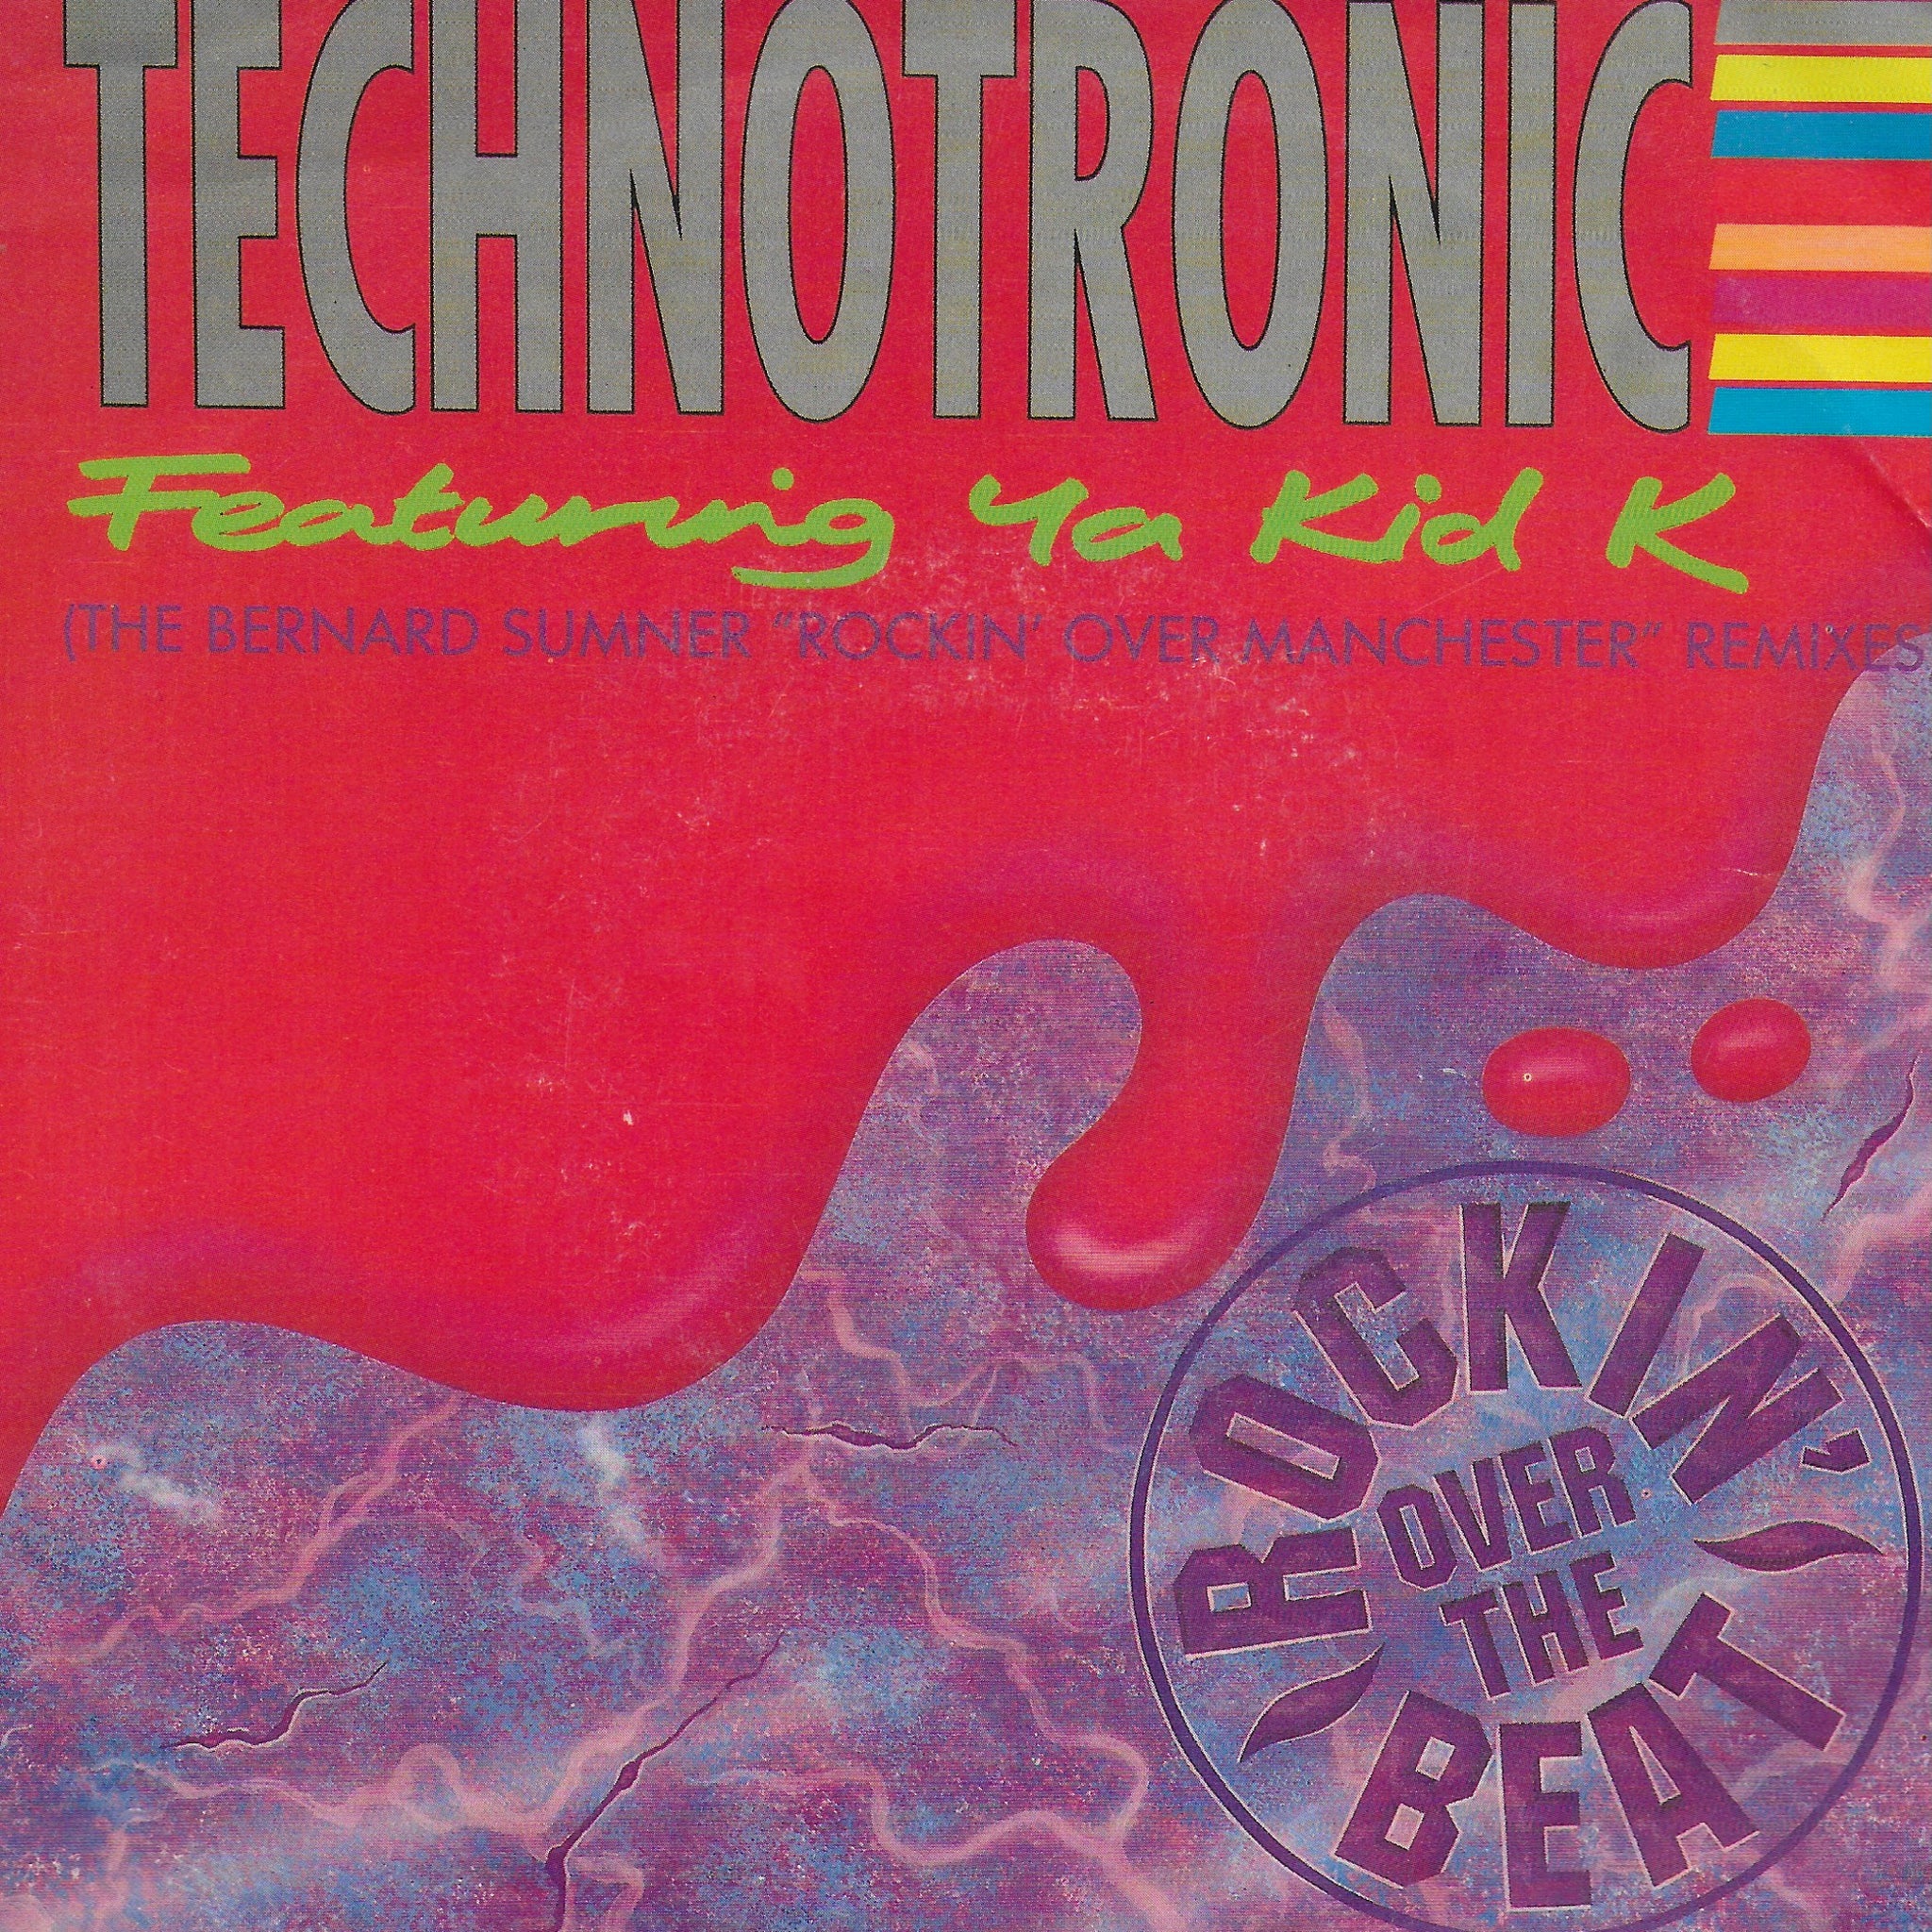 Technotronic feat. Ya Kid K - Rockin' over the beat (remix)